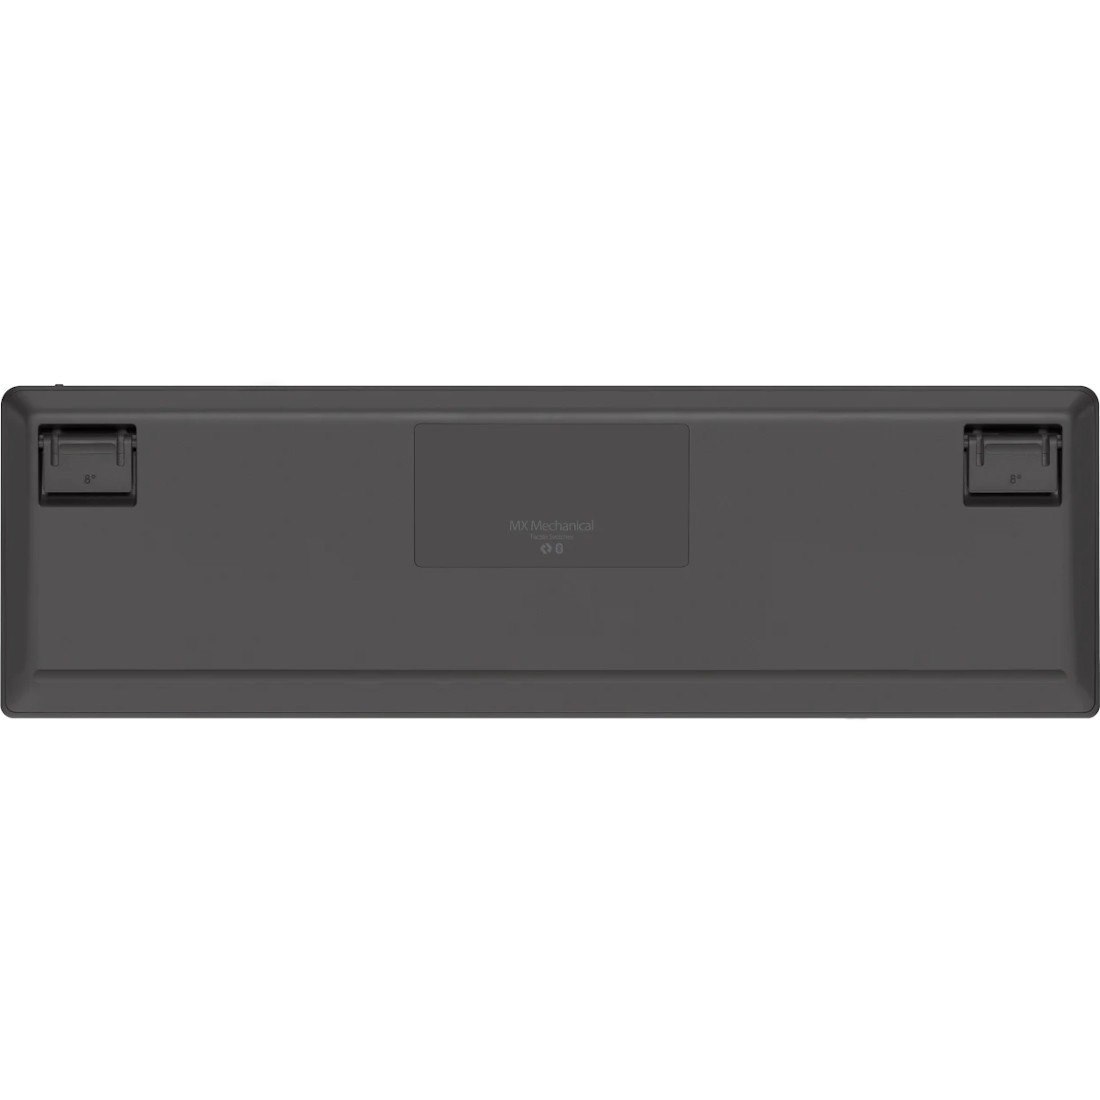 Logitech Master Keyboard - Wireless Connectivity - USB Interface - RGB LED - Graphite